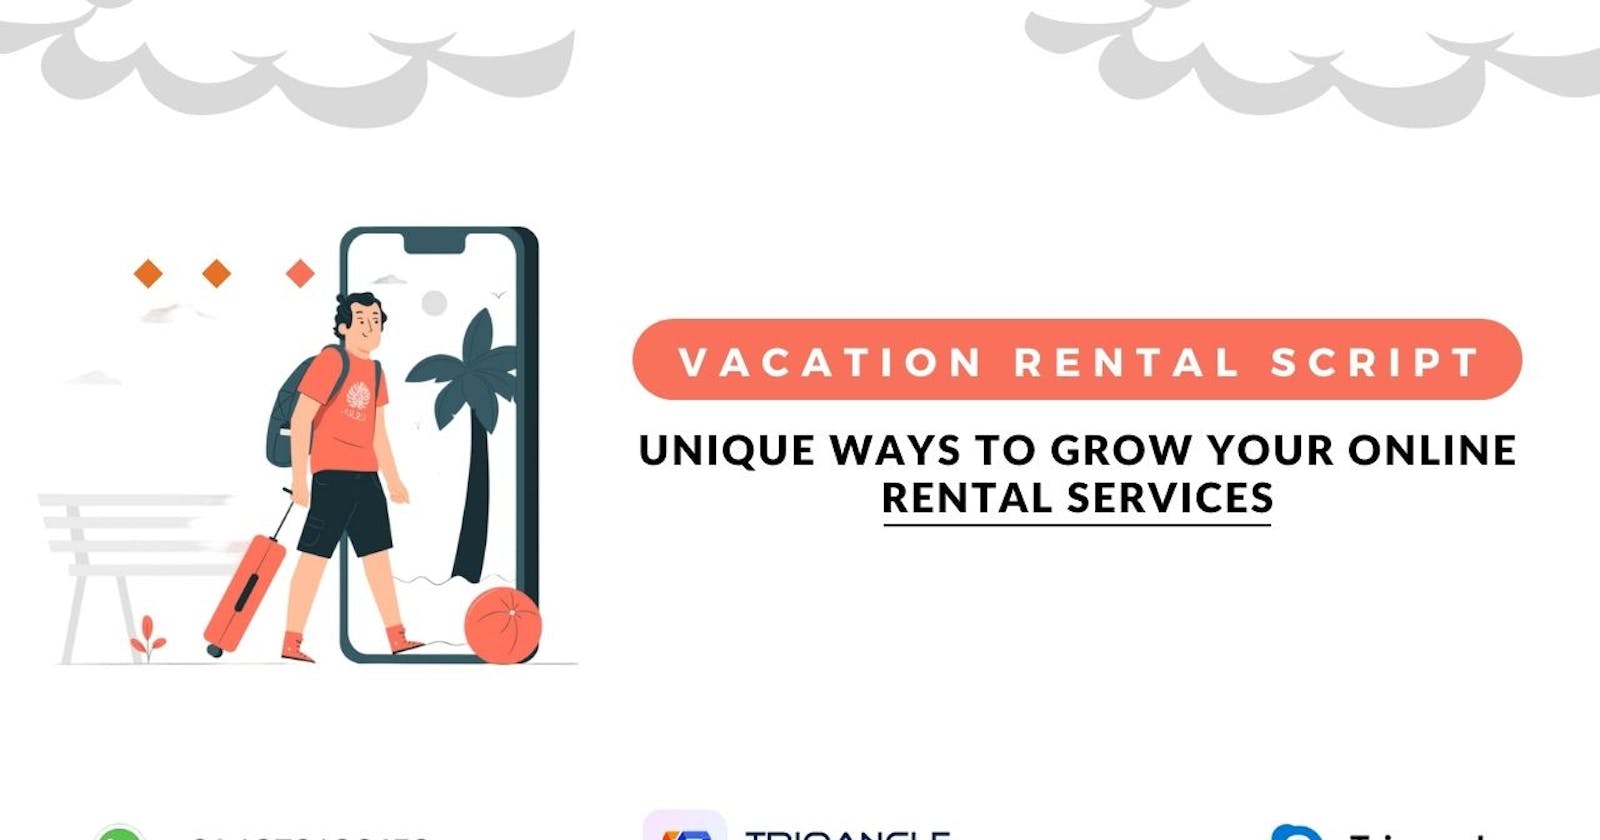 Vacation Rental Script - Unique Ways to Grow Your Online Rental Services